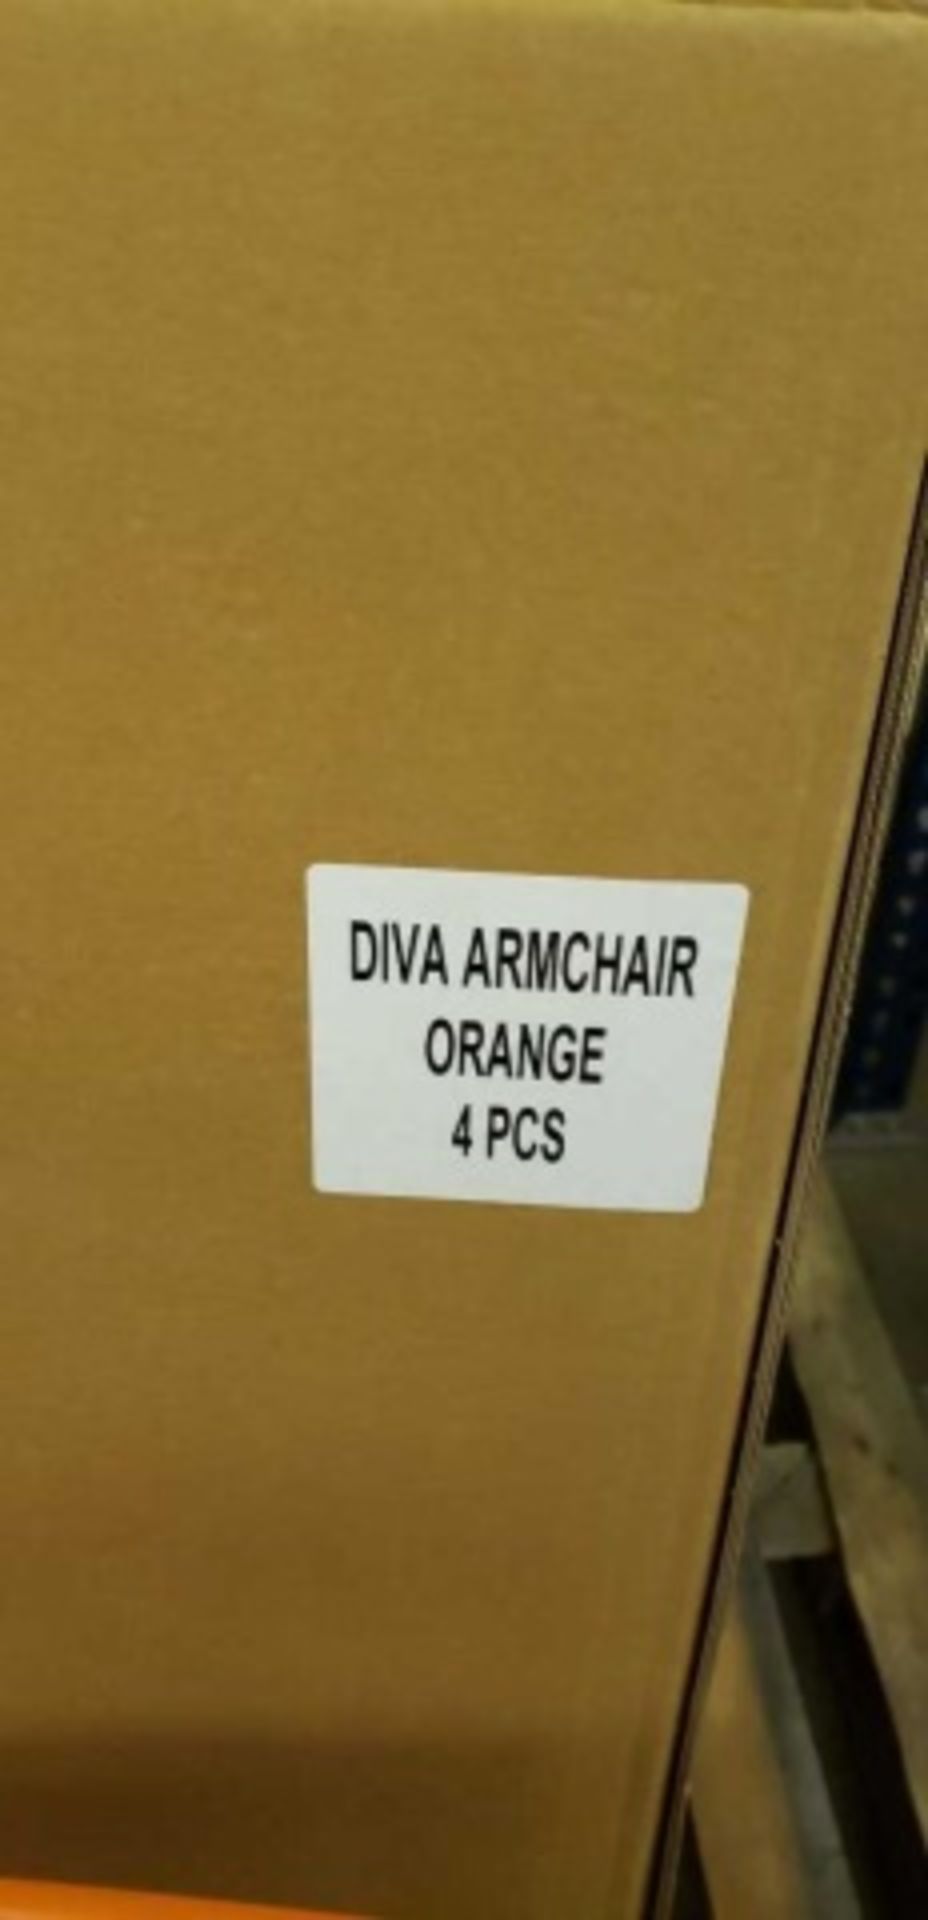 Martinique Arm Chair - Orange. One piece fiberglass reinforced polypropylene. Dimensions: 22.5"w x - Image 2 of 3